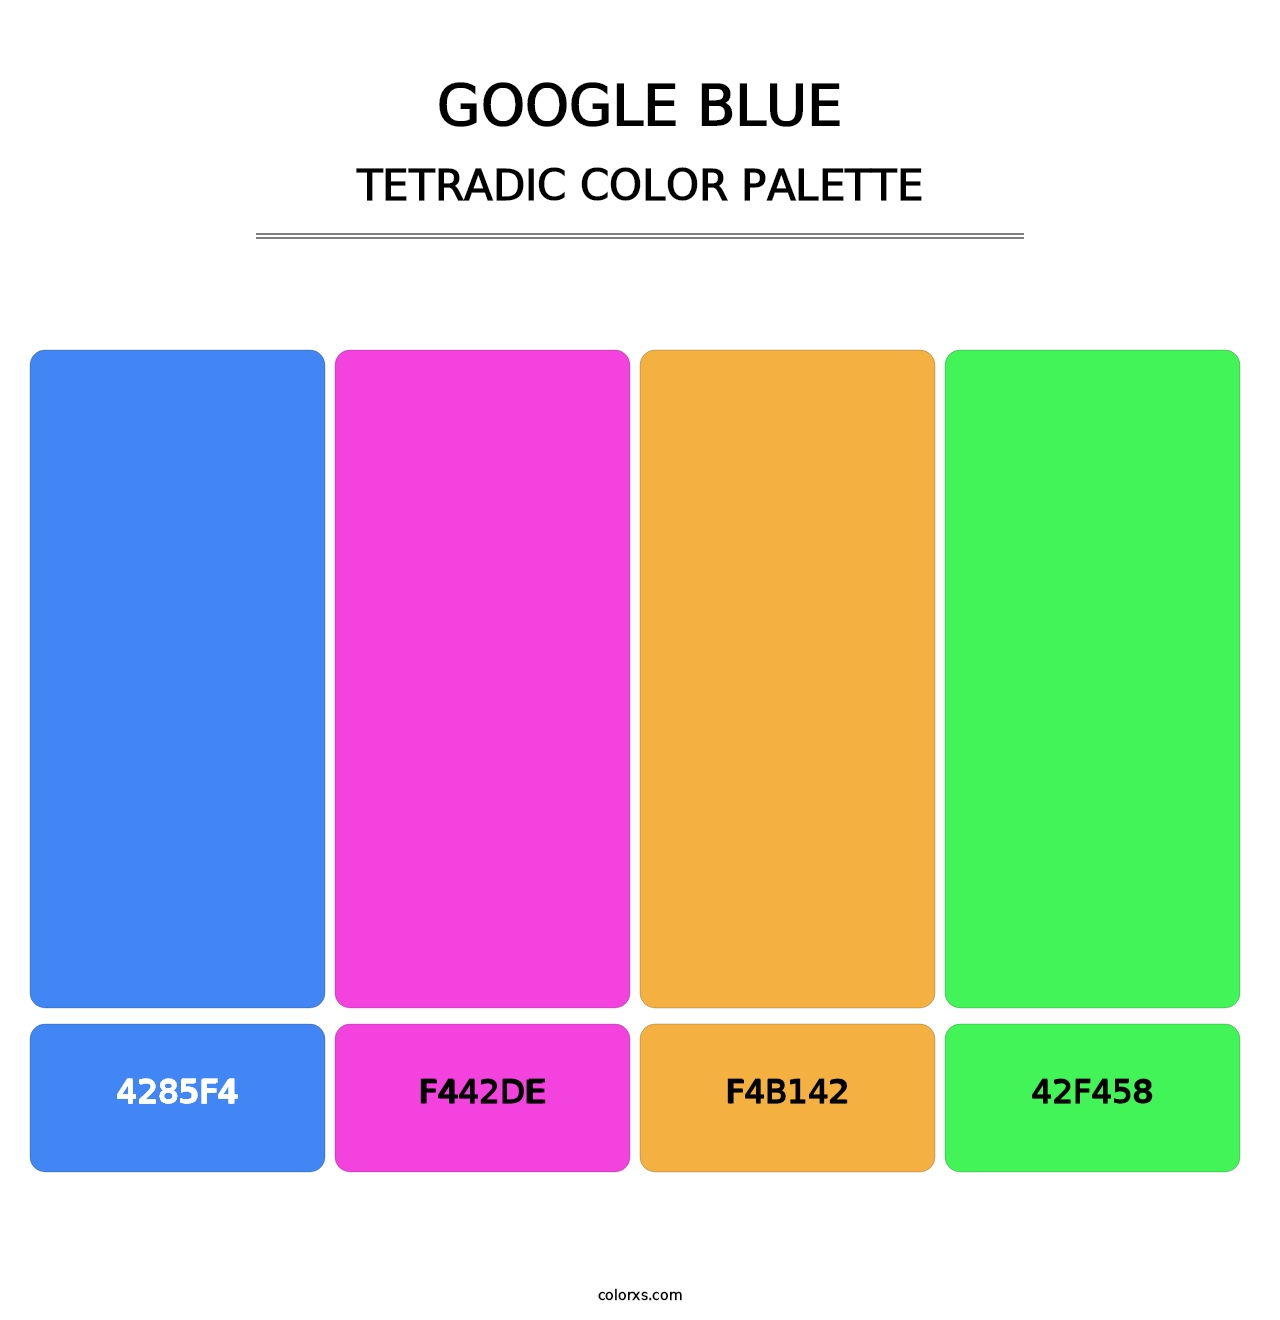 Google Blue - Tetradic Color Palette